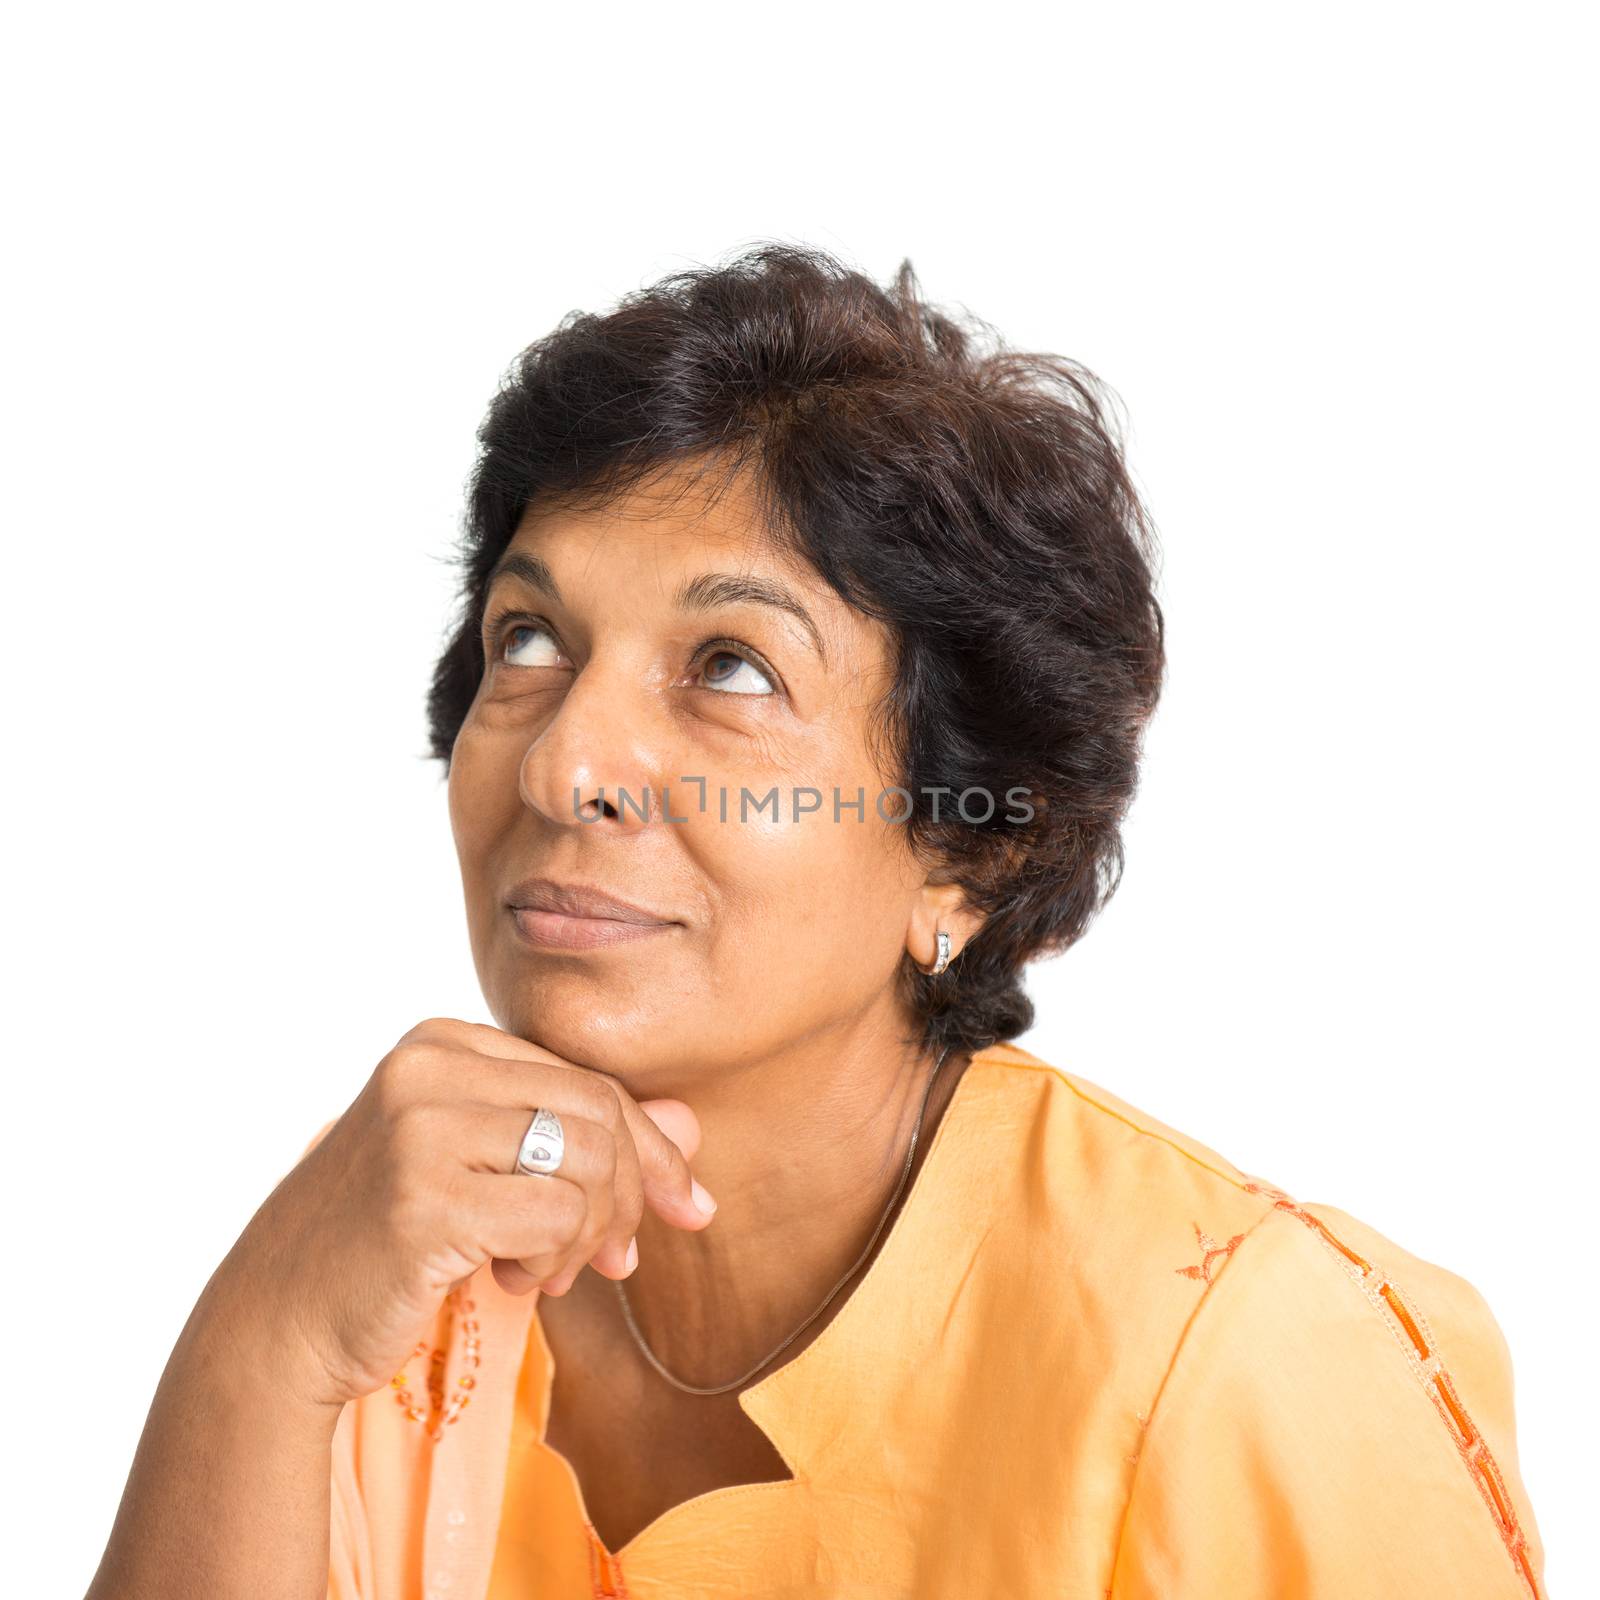 Indian mature woman thinking by szefei